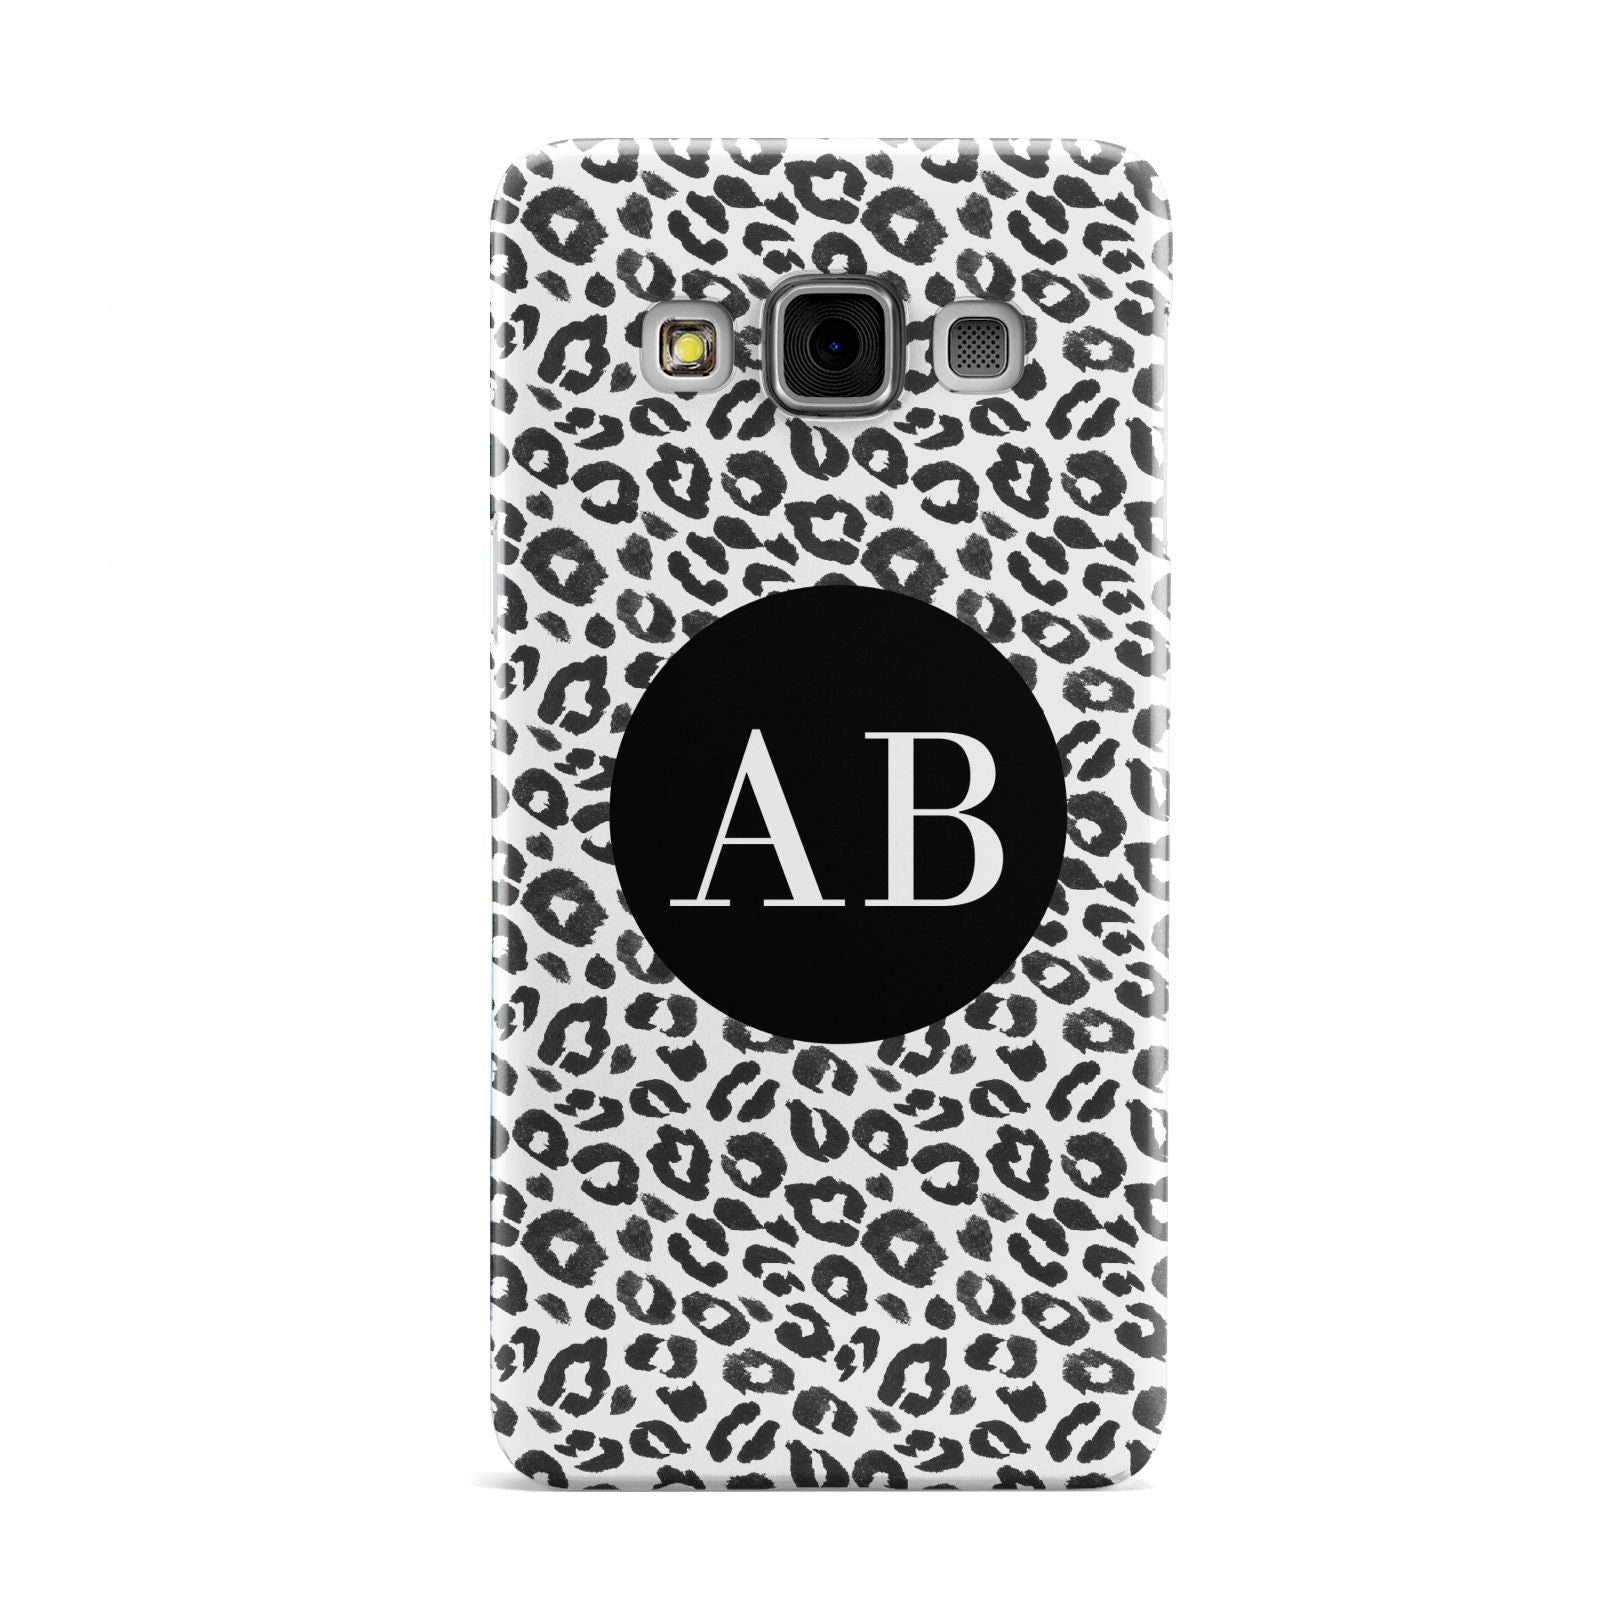 Leopard Print Black and White Samsung Galaxy A3 Case